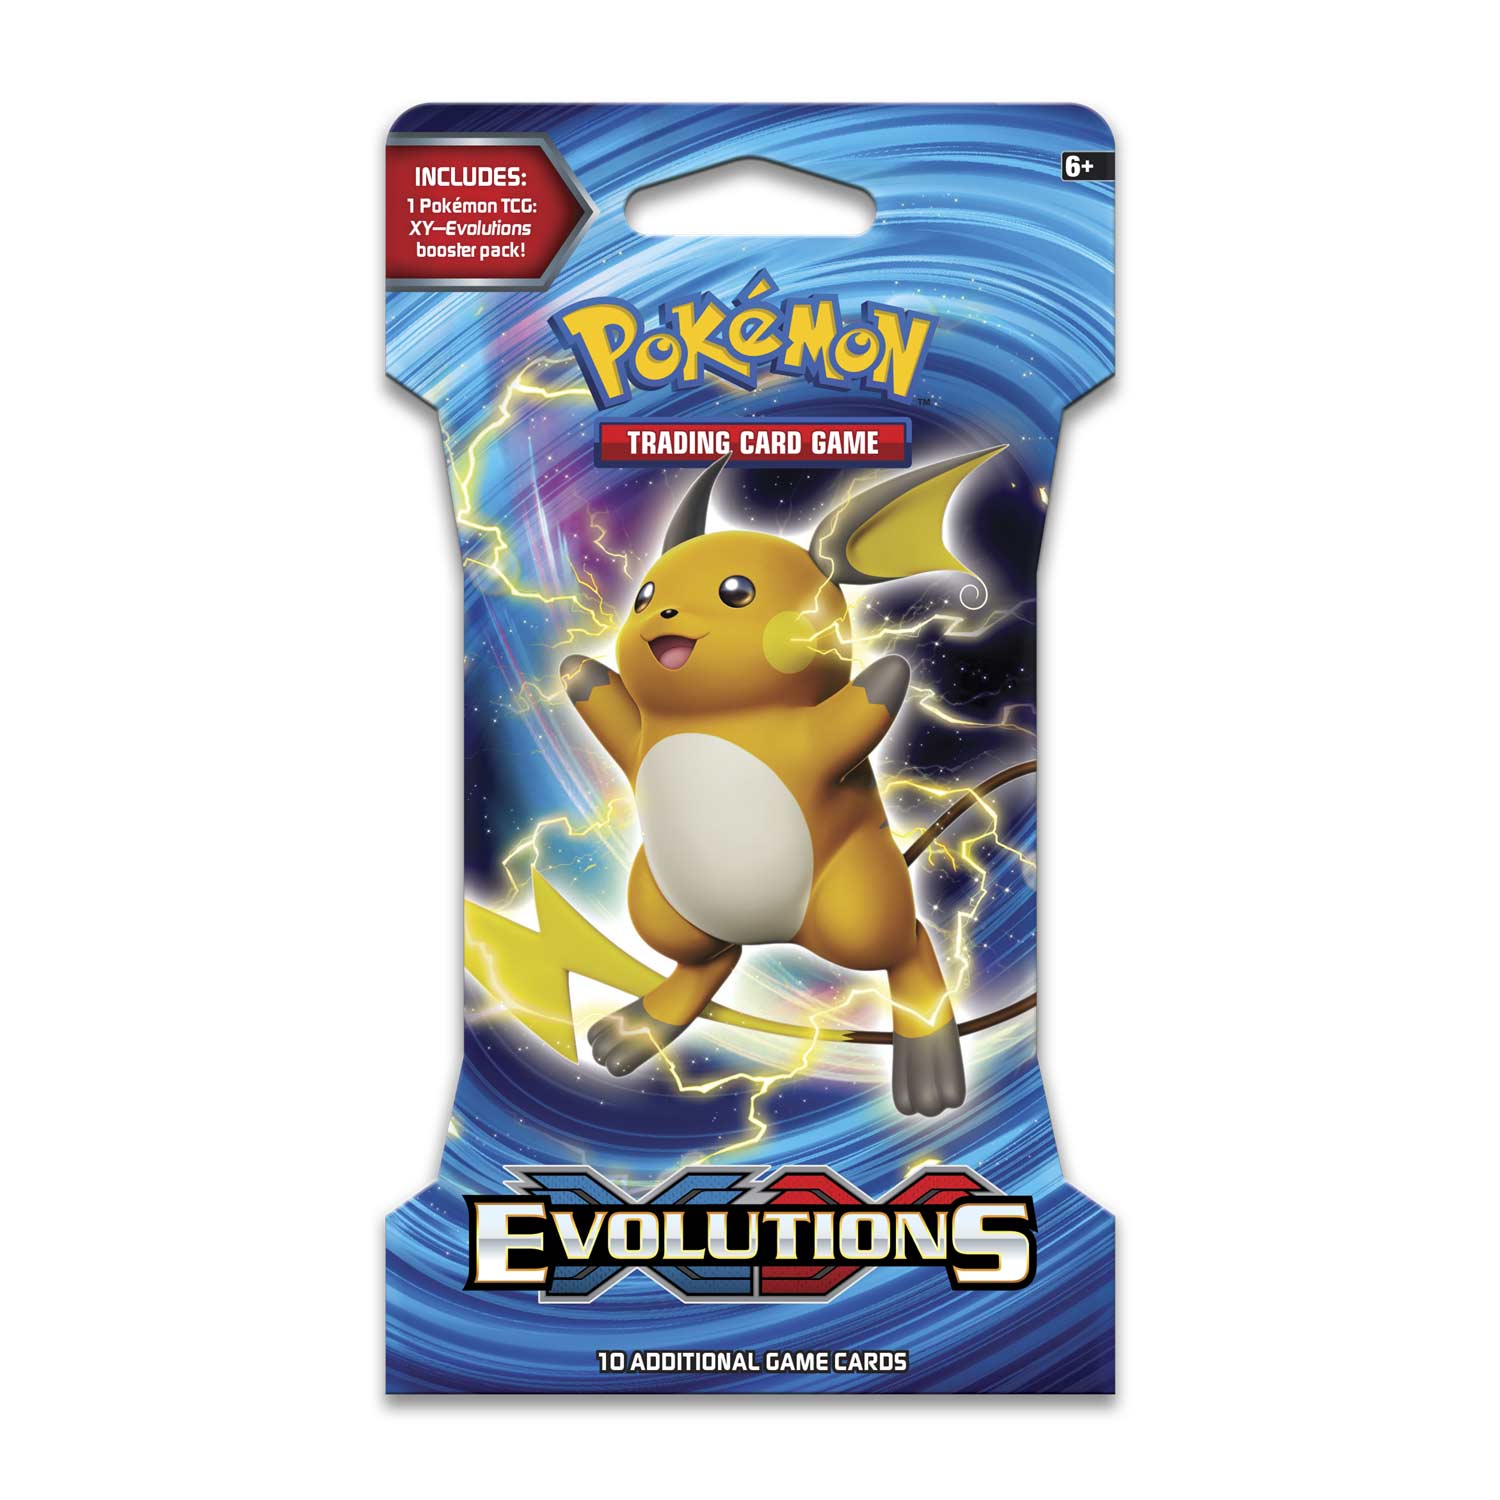 SEALED NEW POKEMON EVOLUTION XY Booster Box Cards Battle Packs 